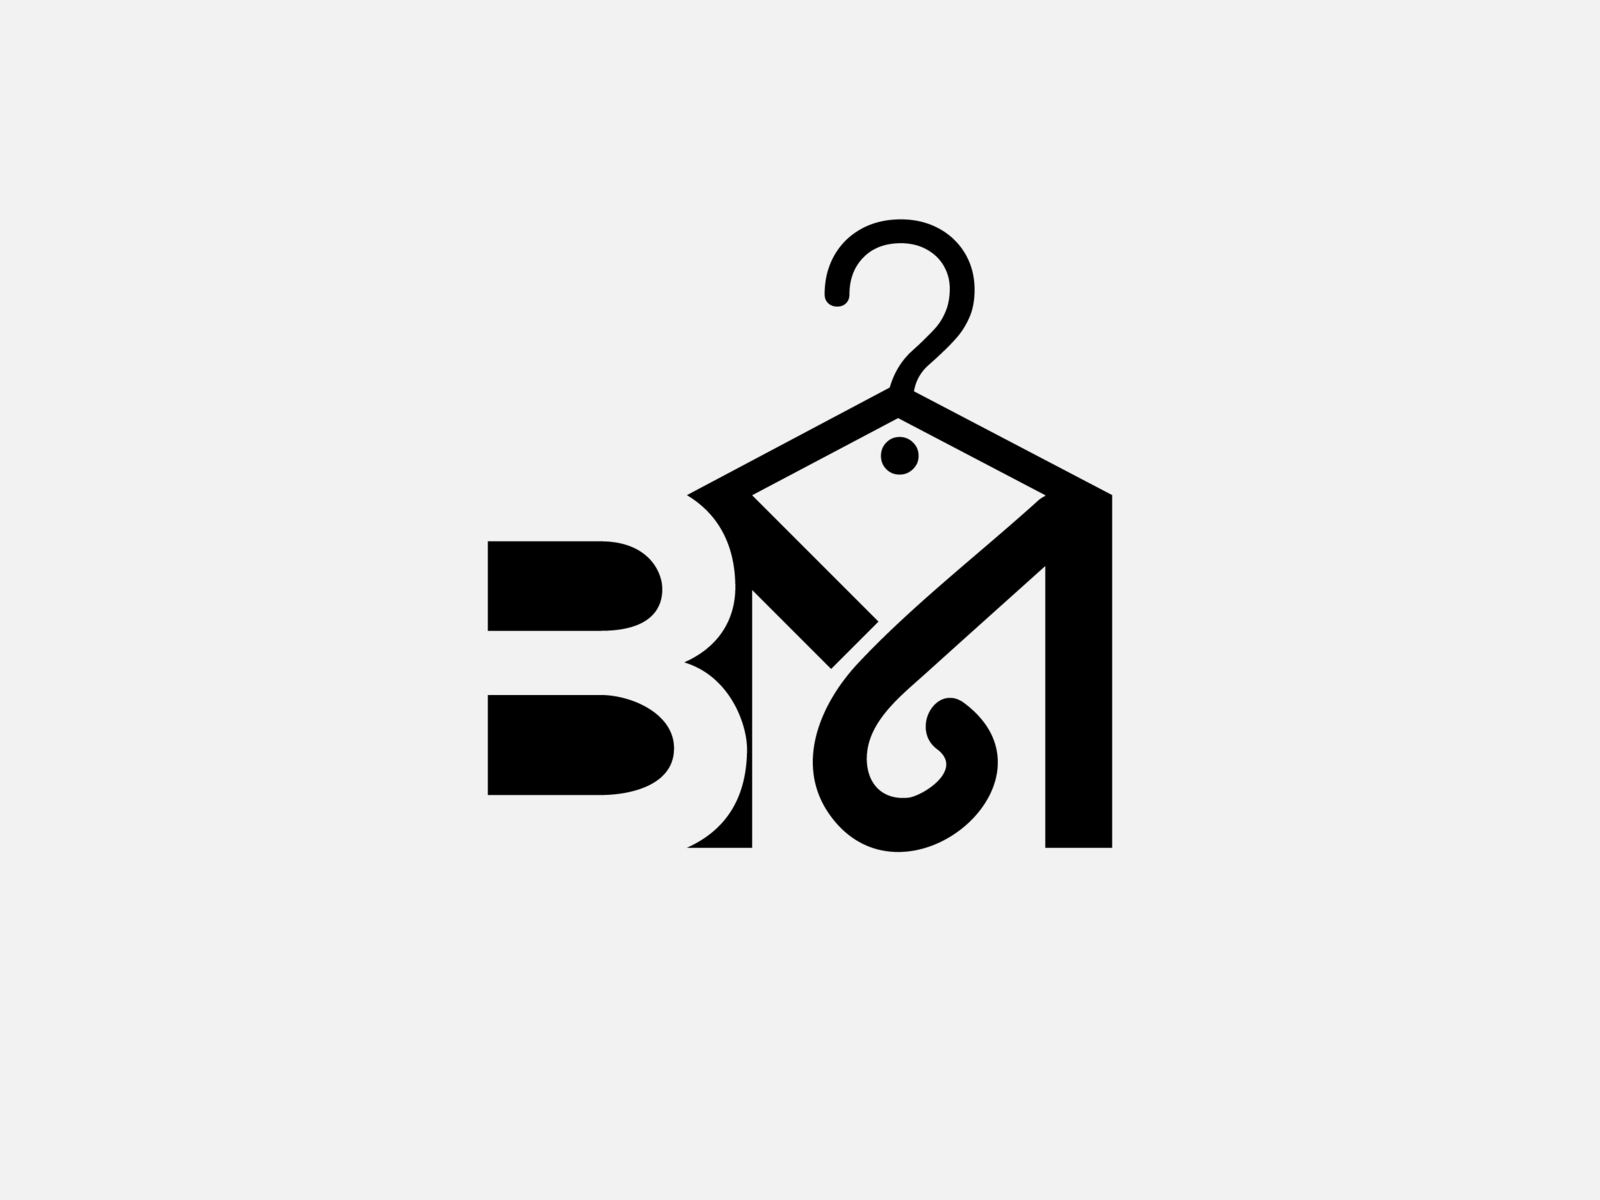 B & M cloth brand logo by Rasel Ahmed on Dribbble